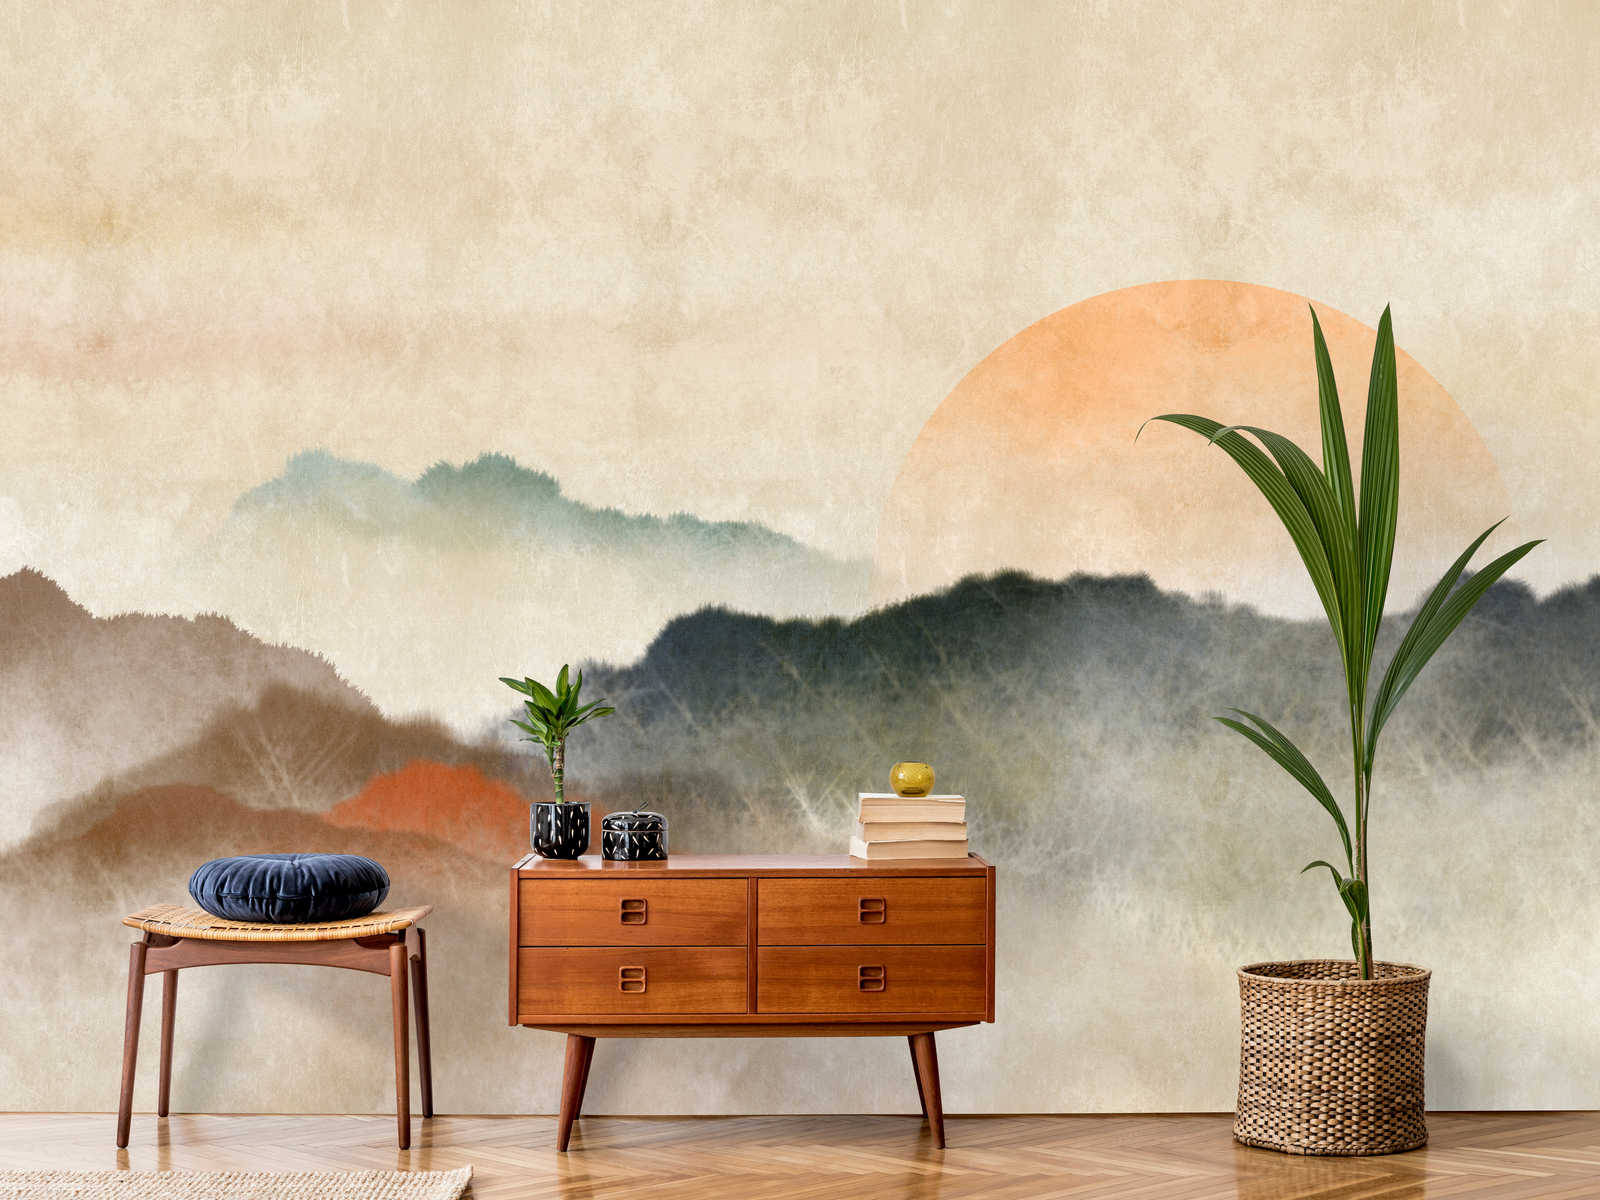             Akaishi 3 - sunrise mural, Asia style art print
        